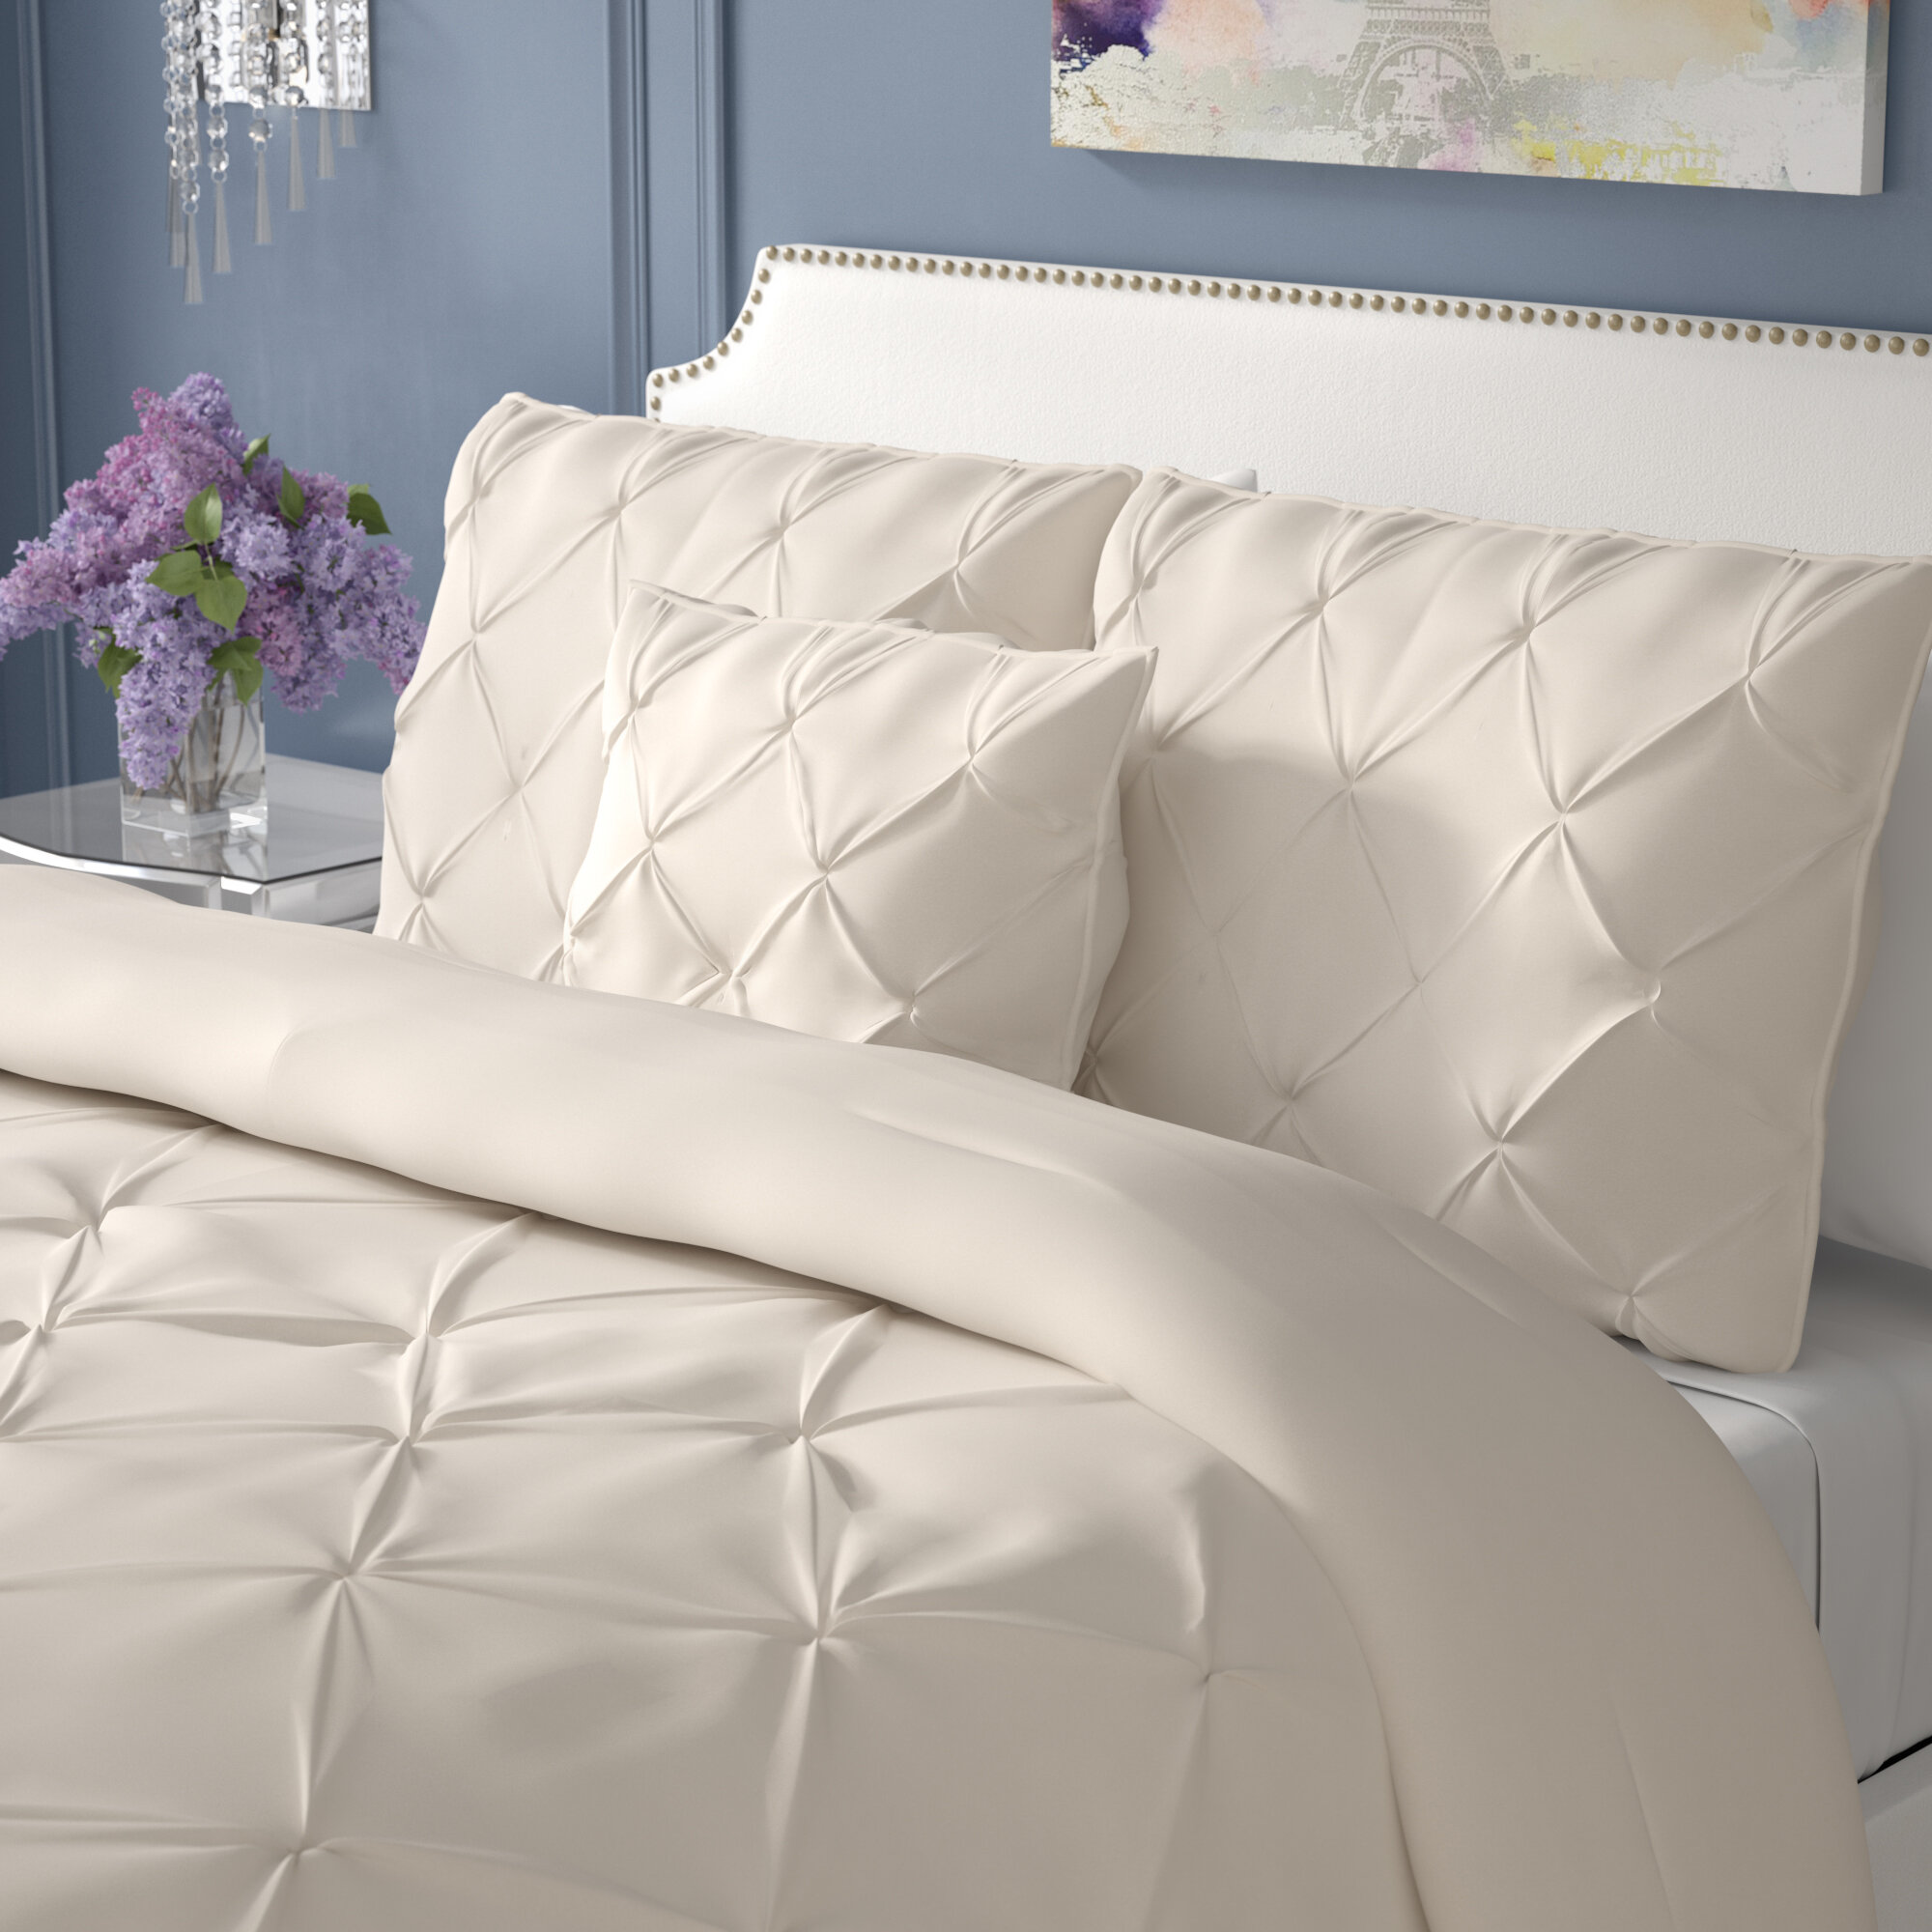 Hampton Hill Corfu Comforter Set Queen White JLA Home FB10-997